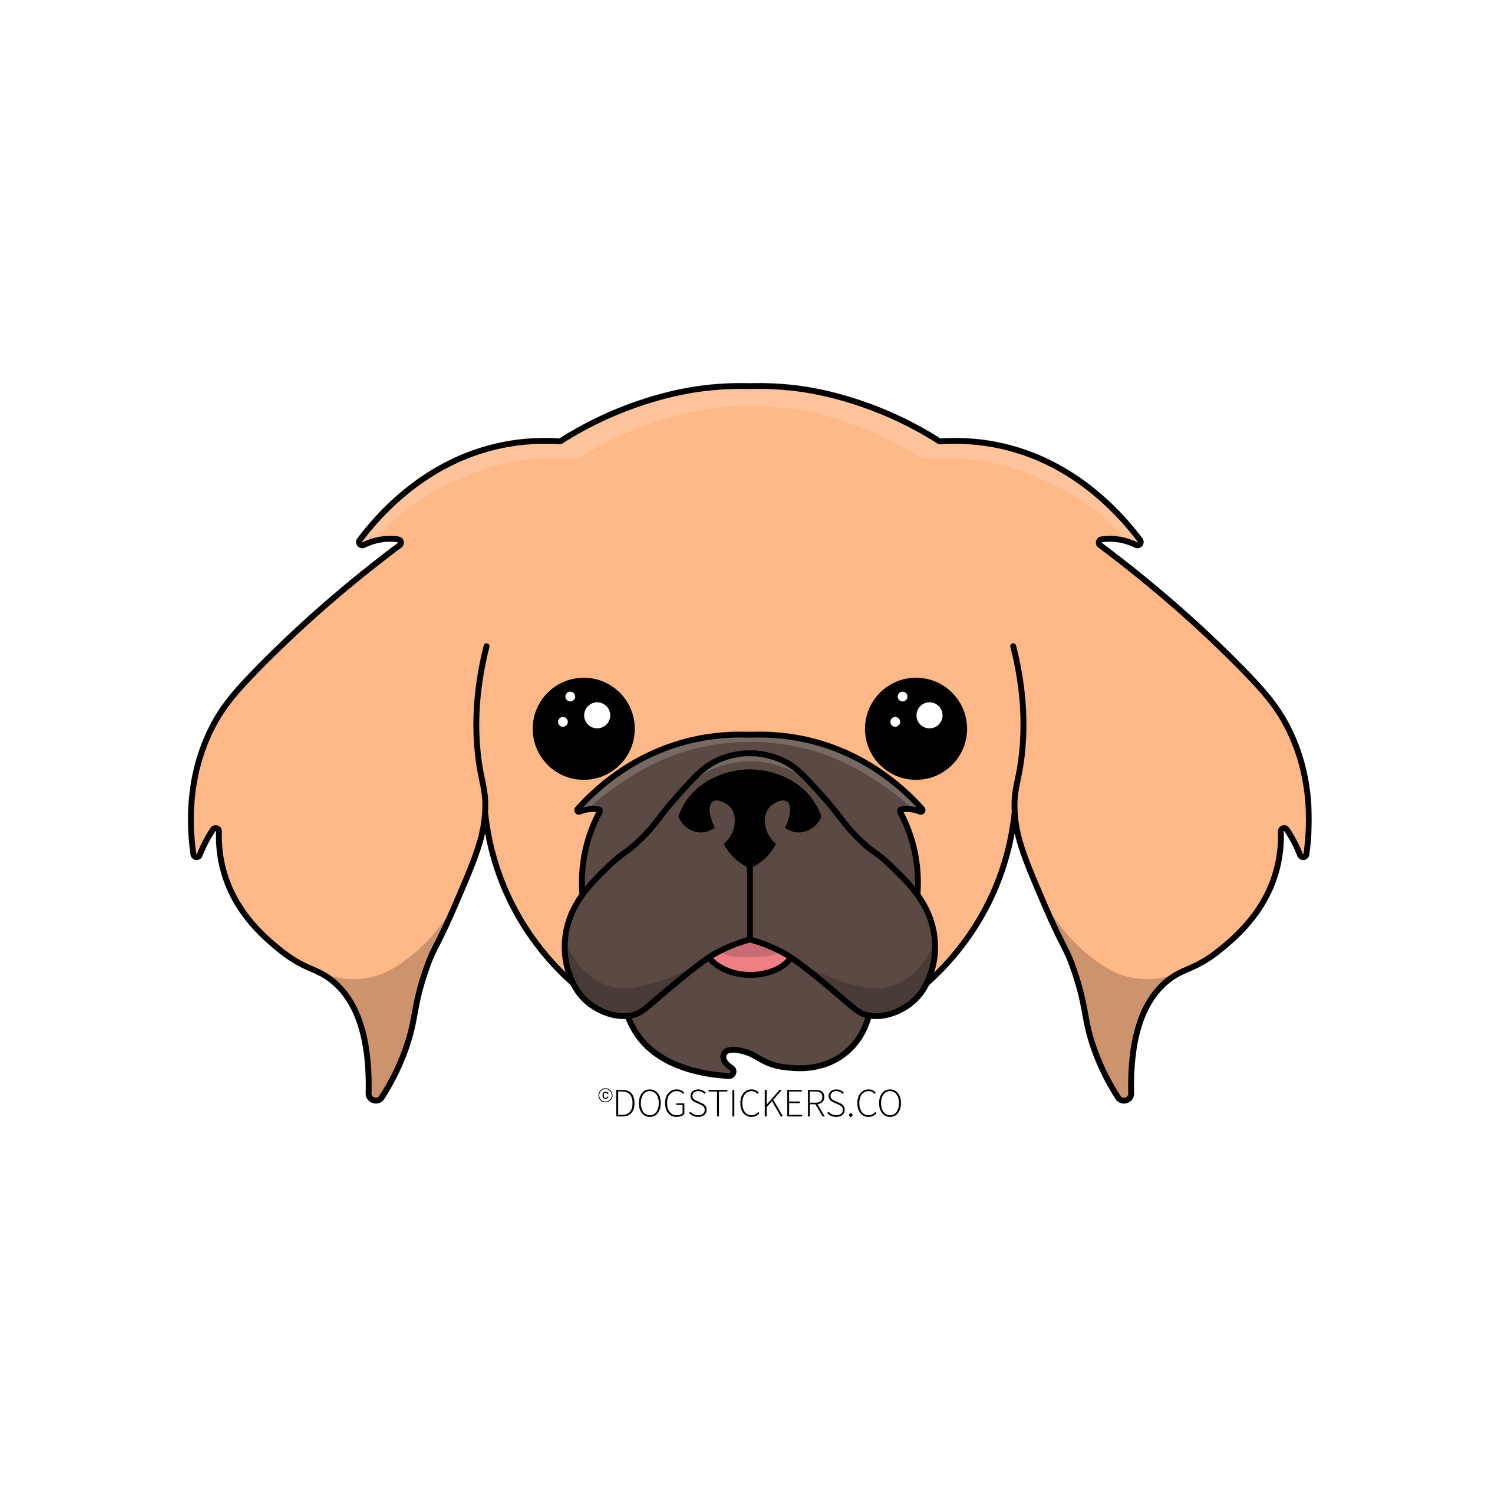 Pekingese Dog Sticker - Dogstickers.co